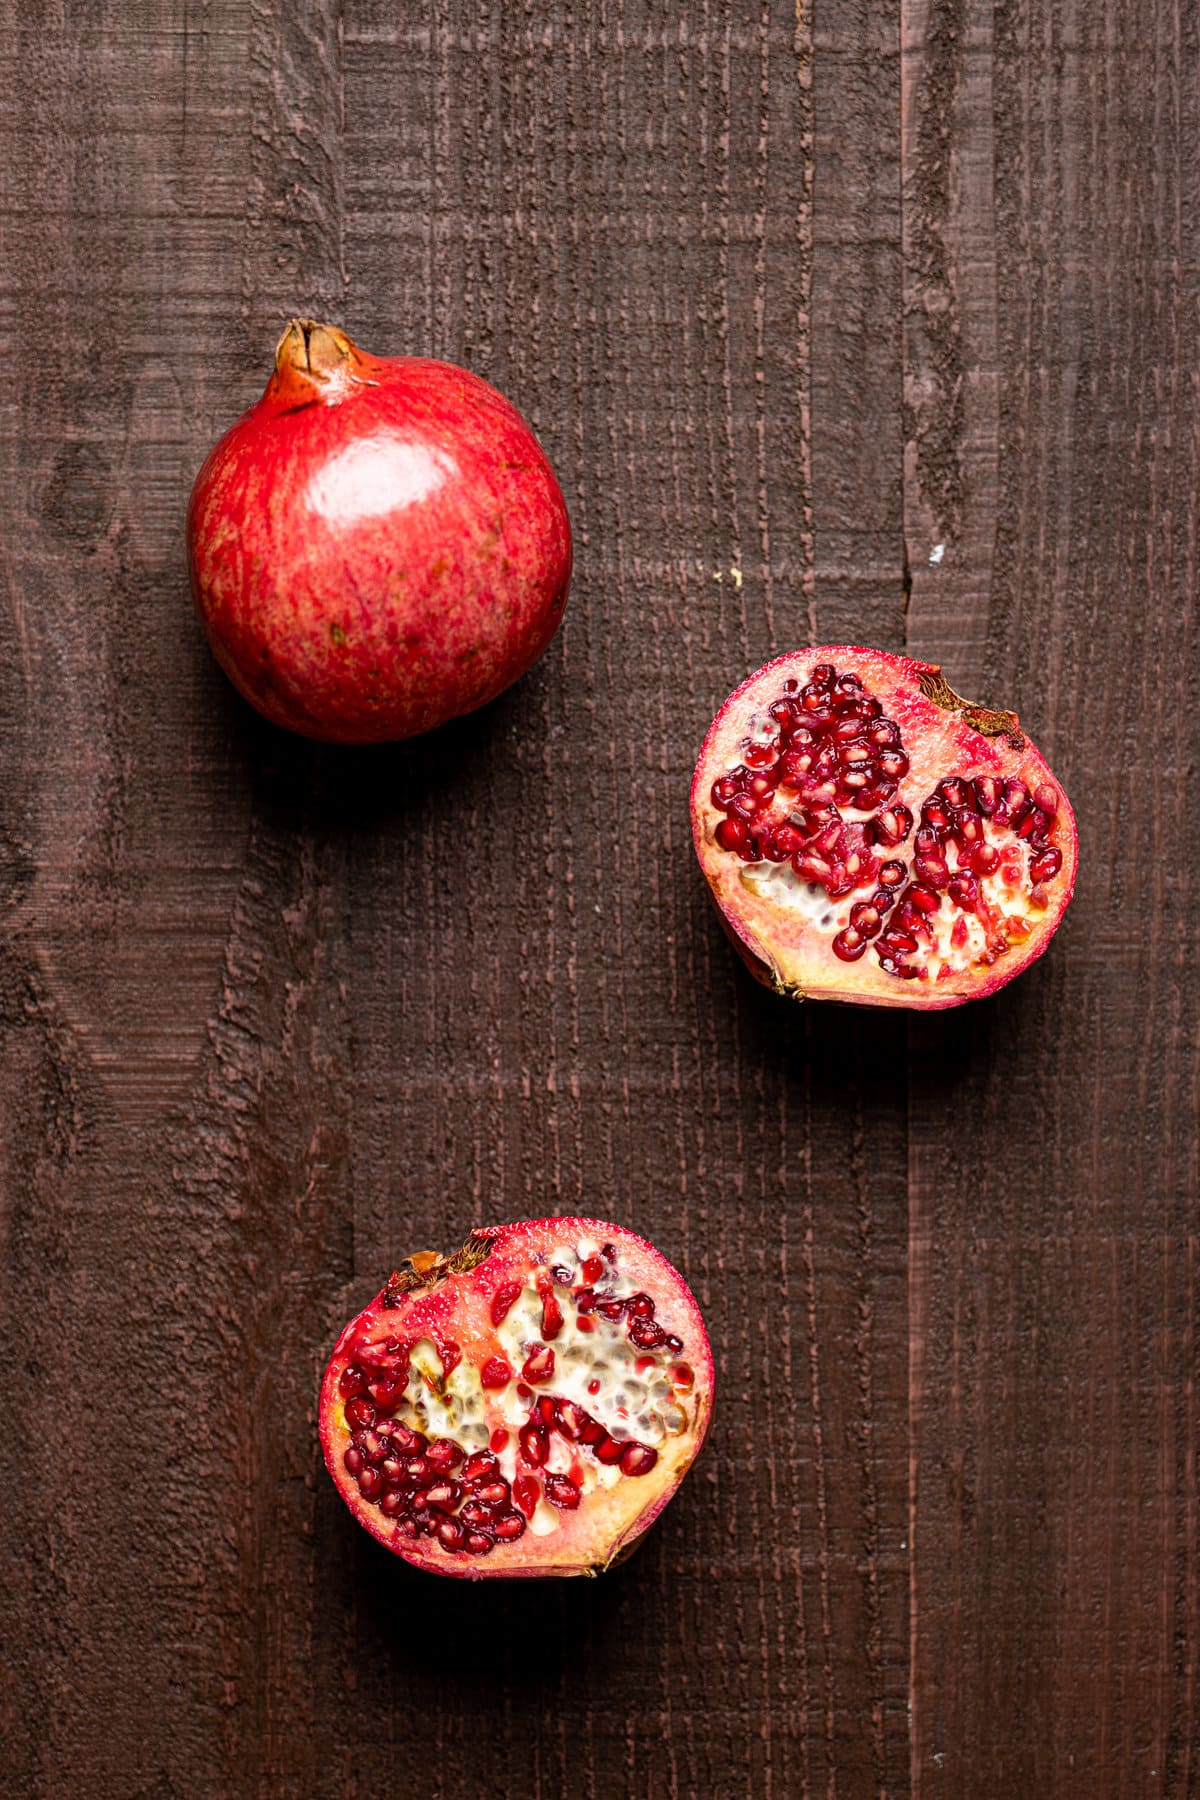 Two pomegranate halves next to a full pomegranate